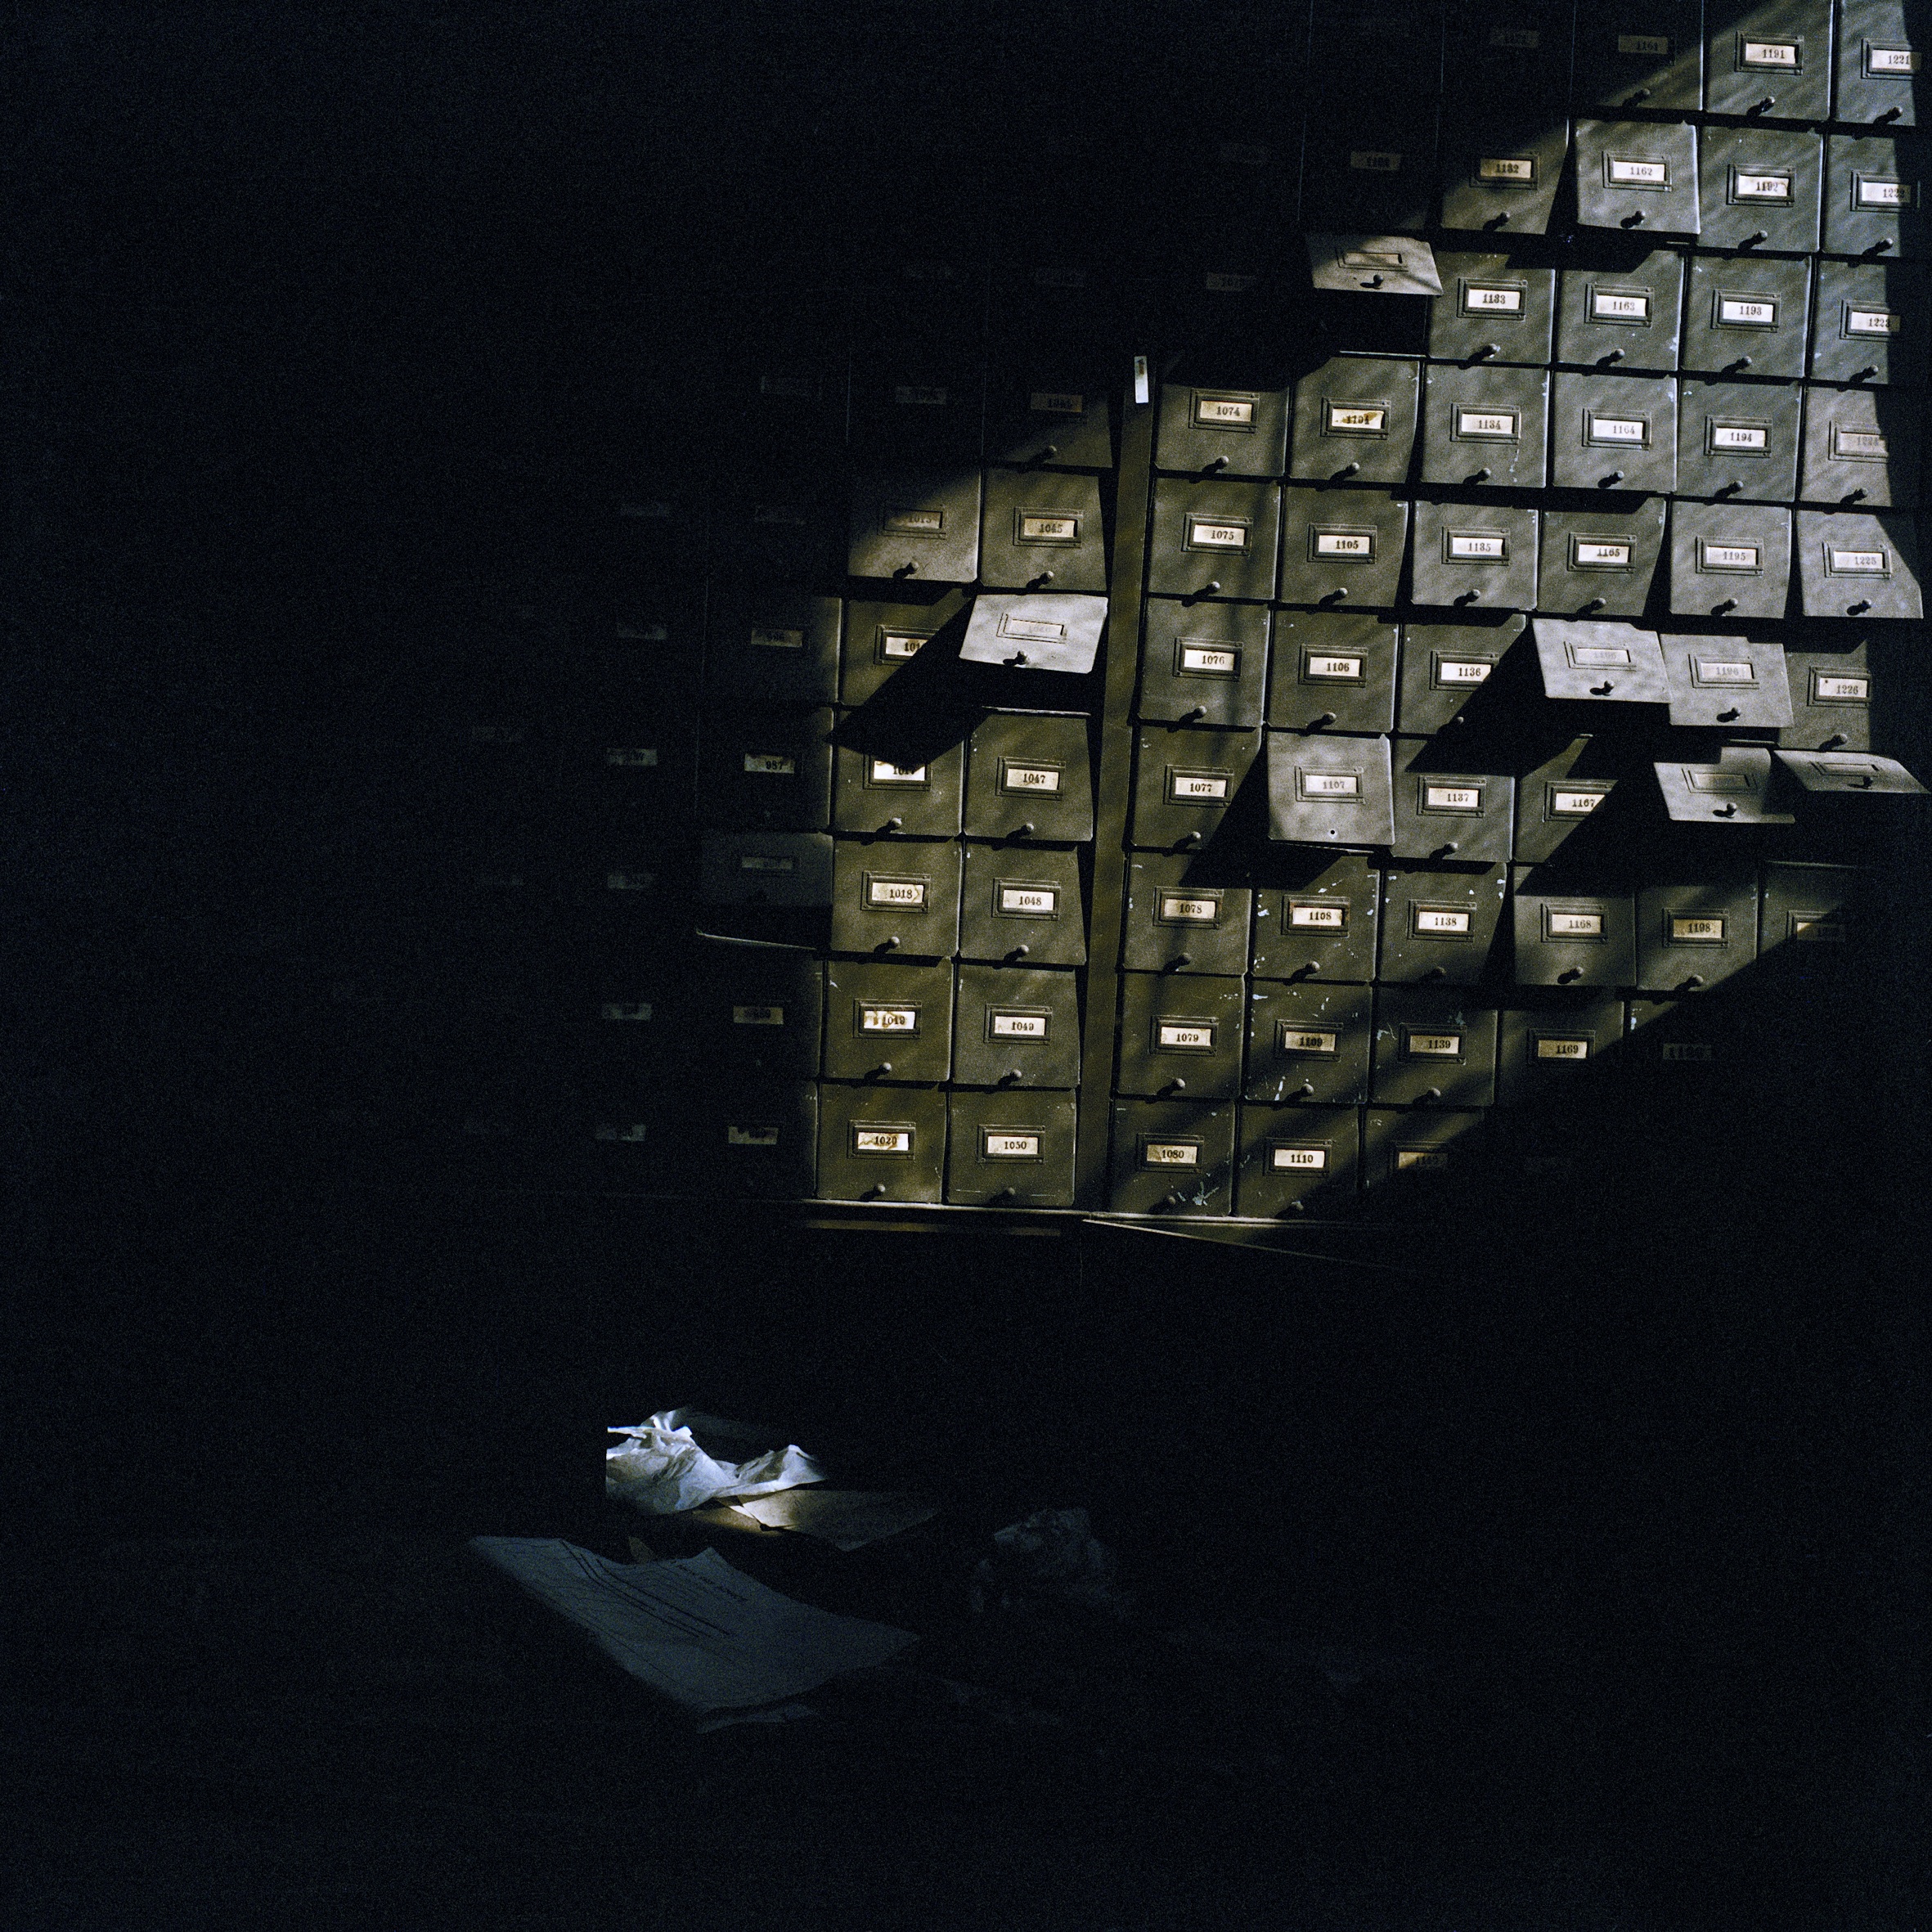 Filing Cabinets (1998)